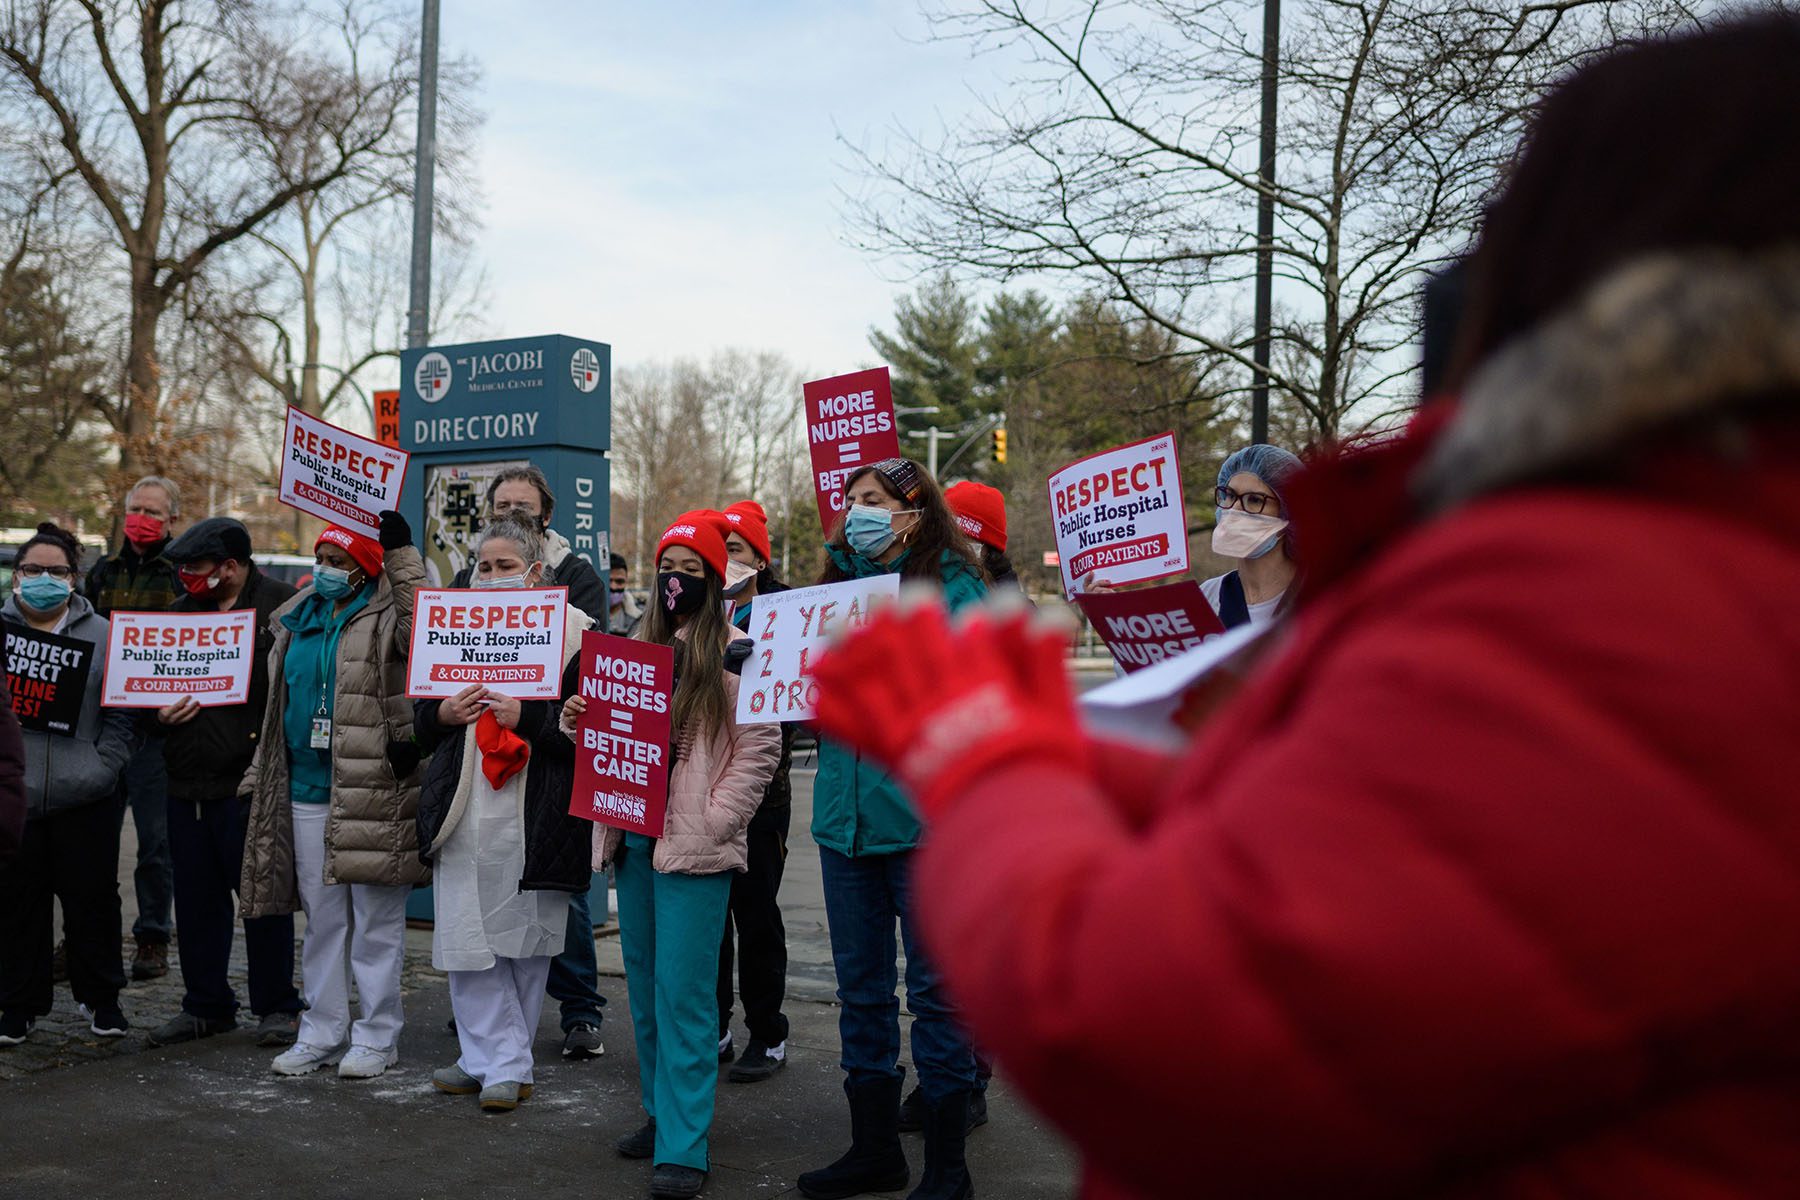 Nurses hold signs that read "Respect public hospital nurses" and "more nurses = better care."